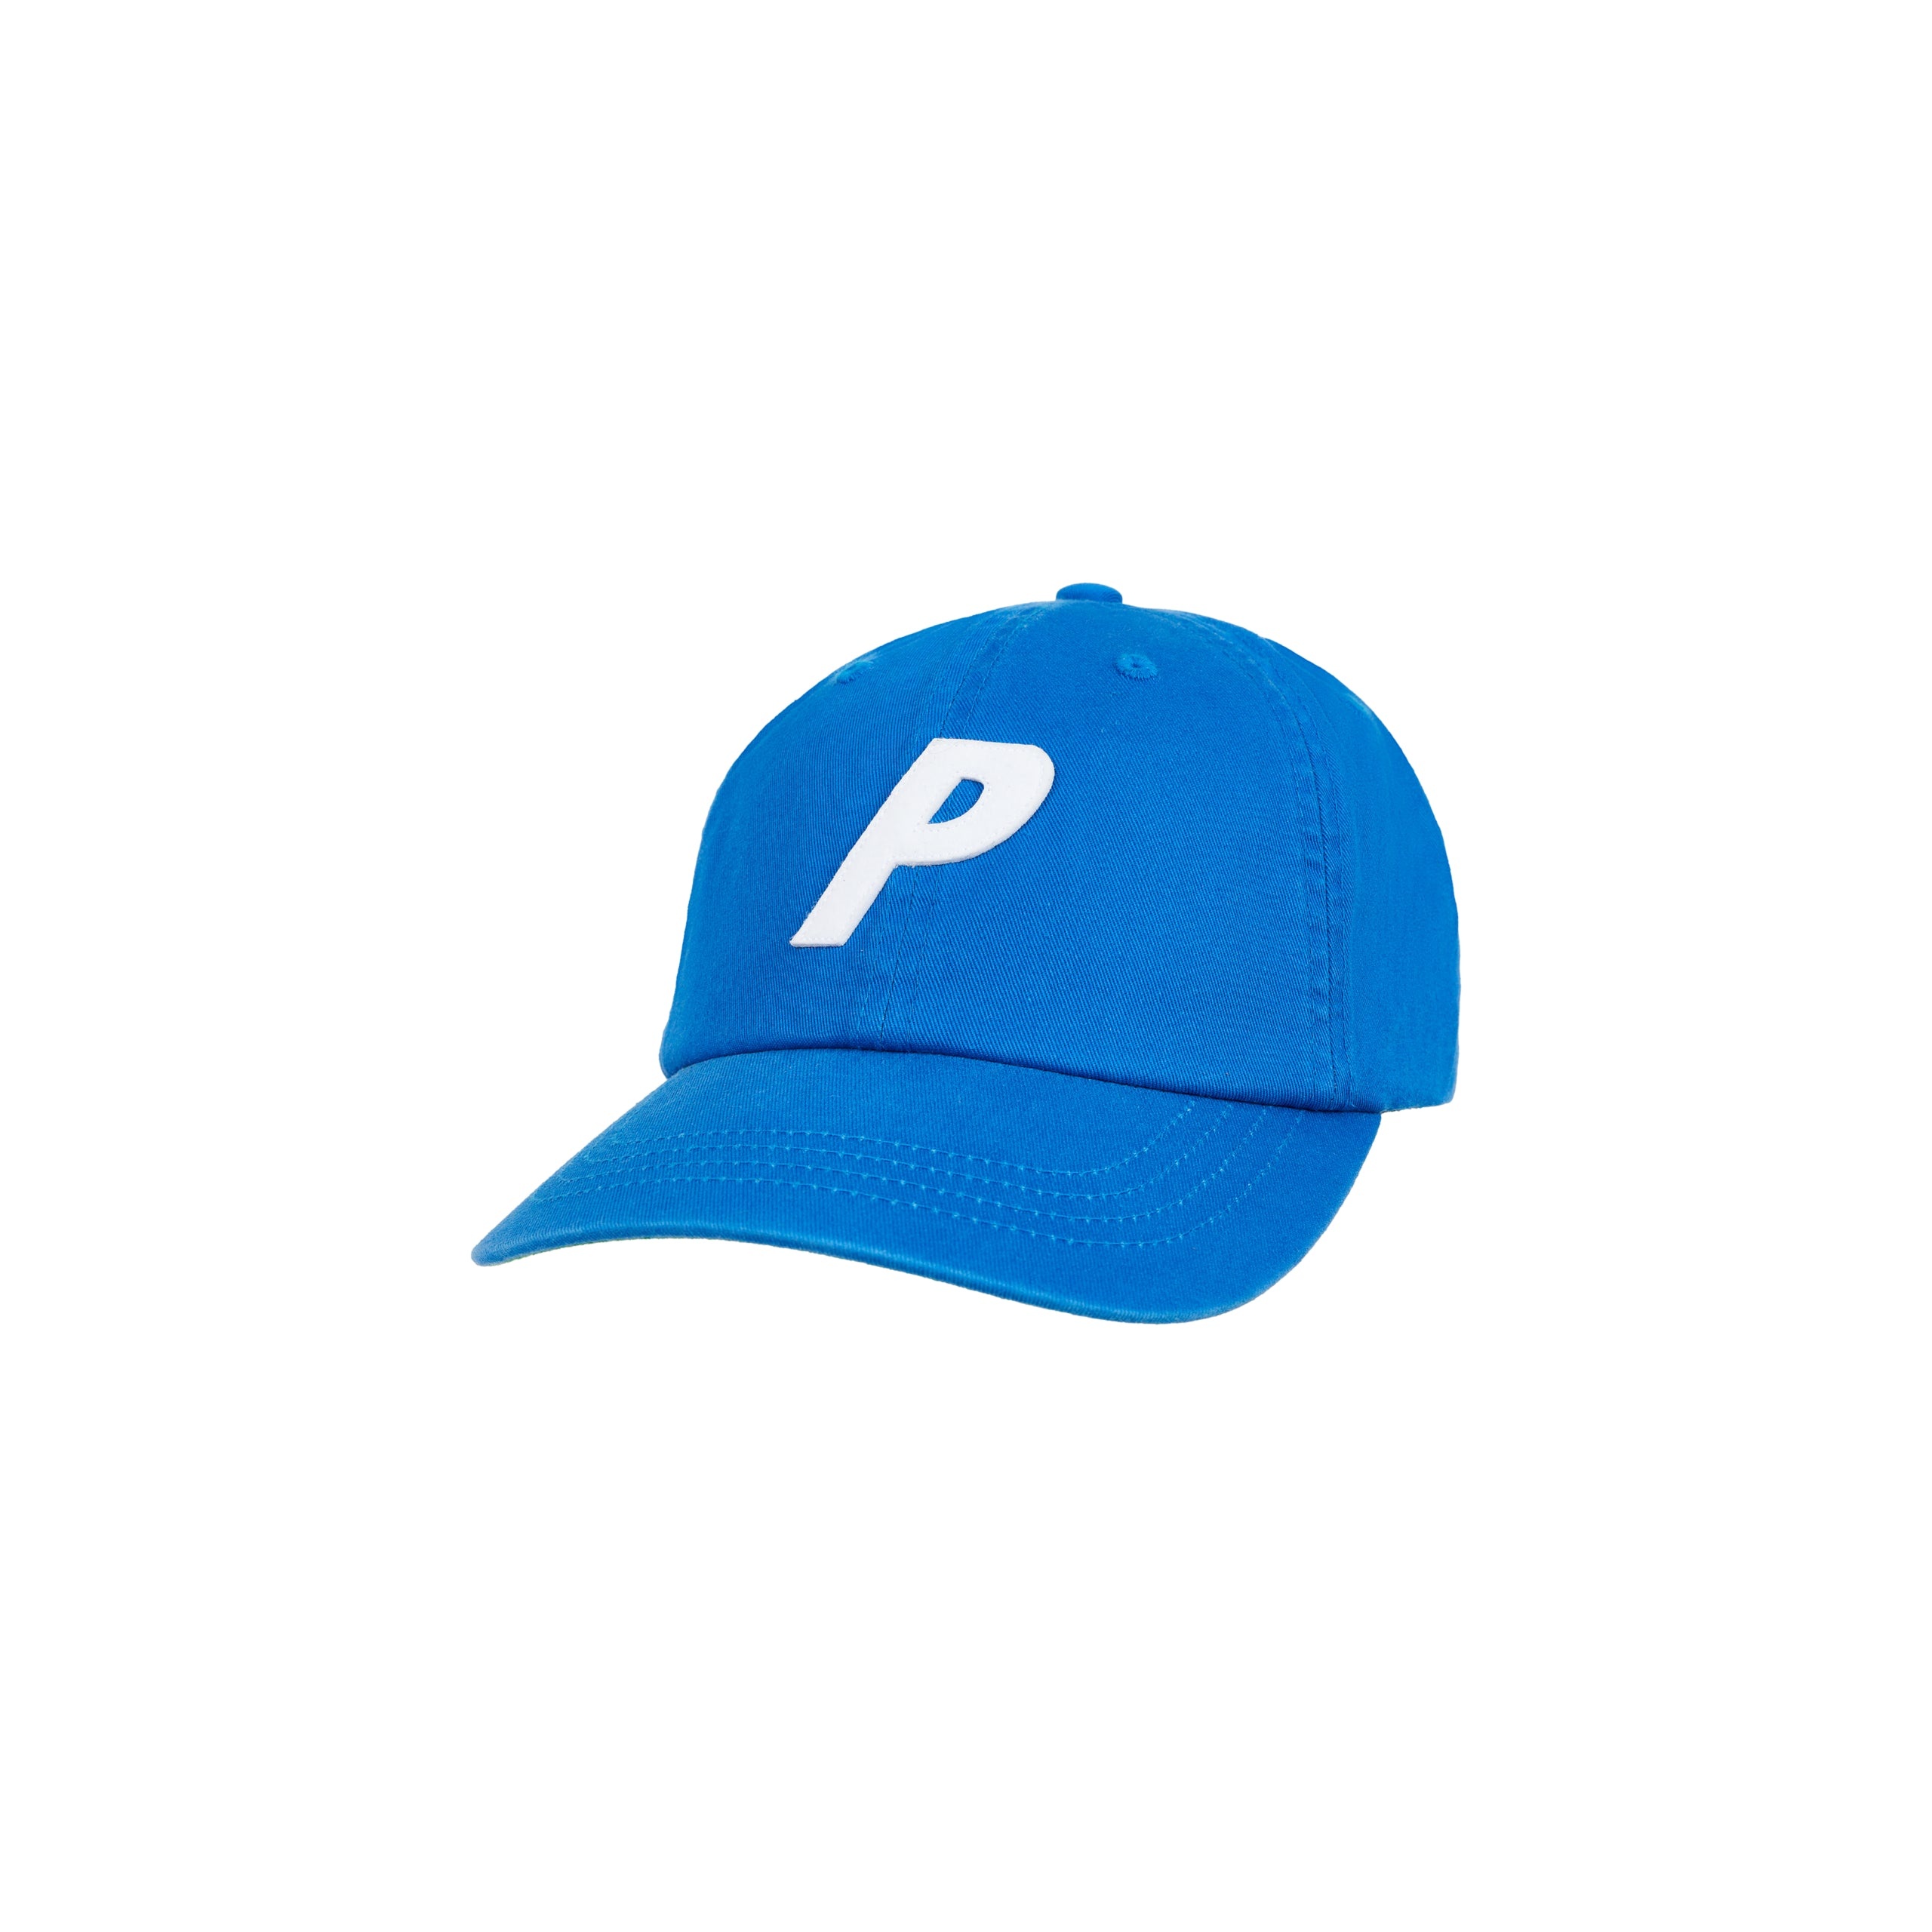 P 6-PANEL PALATIAL BLUE - 1